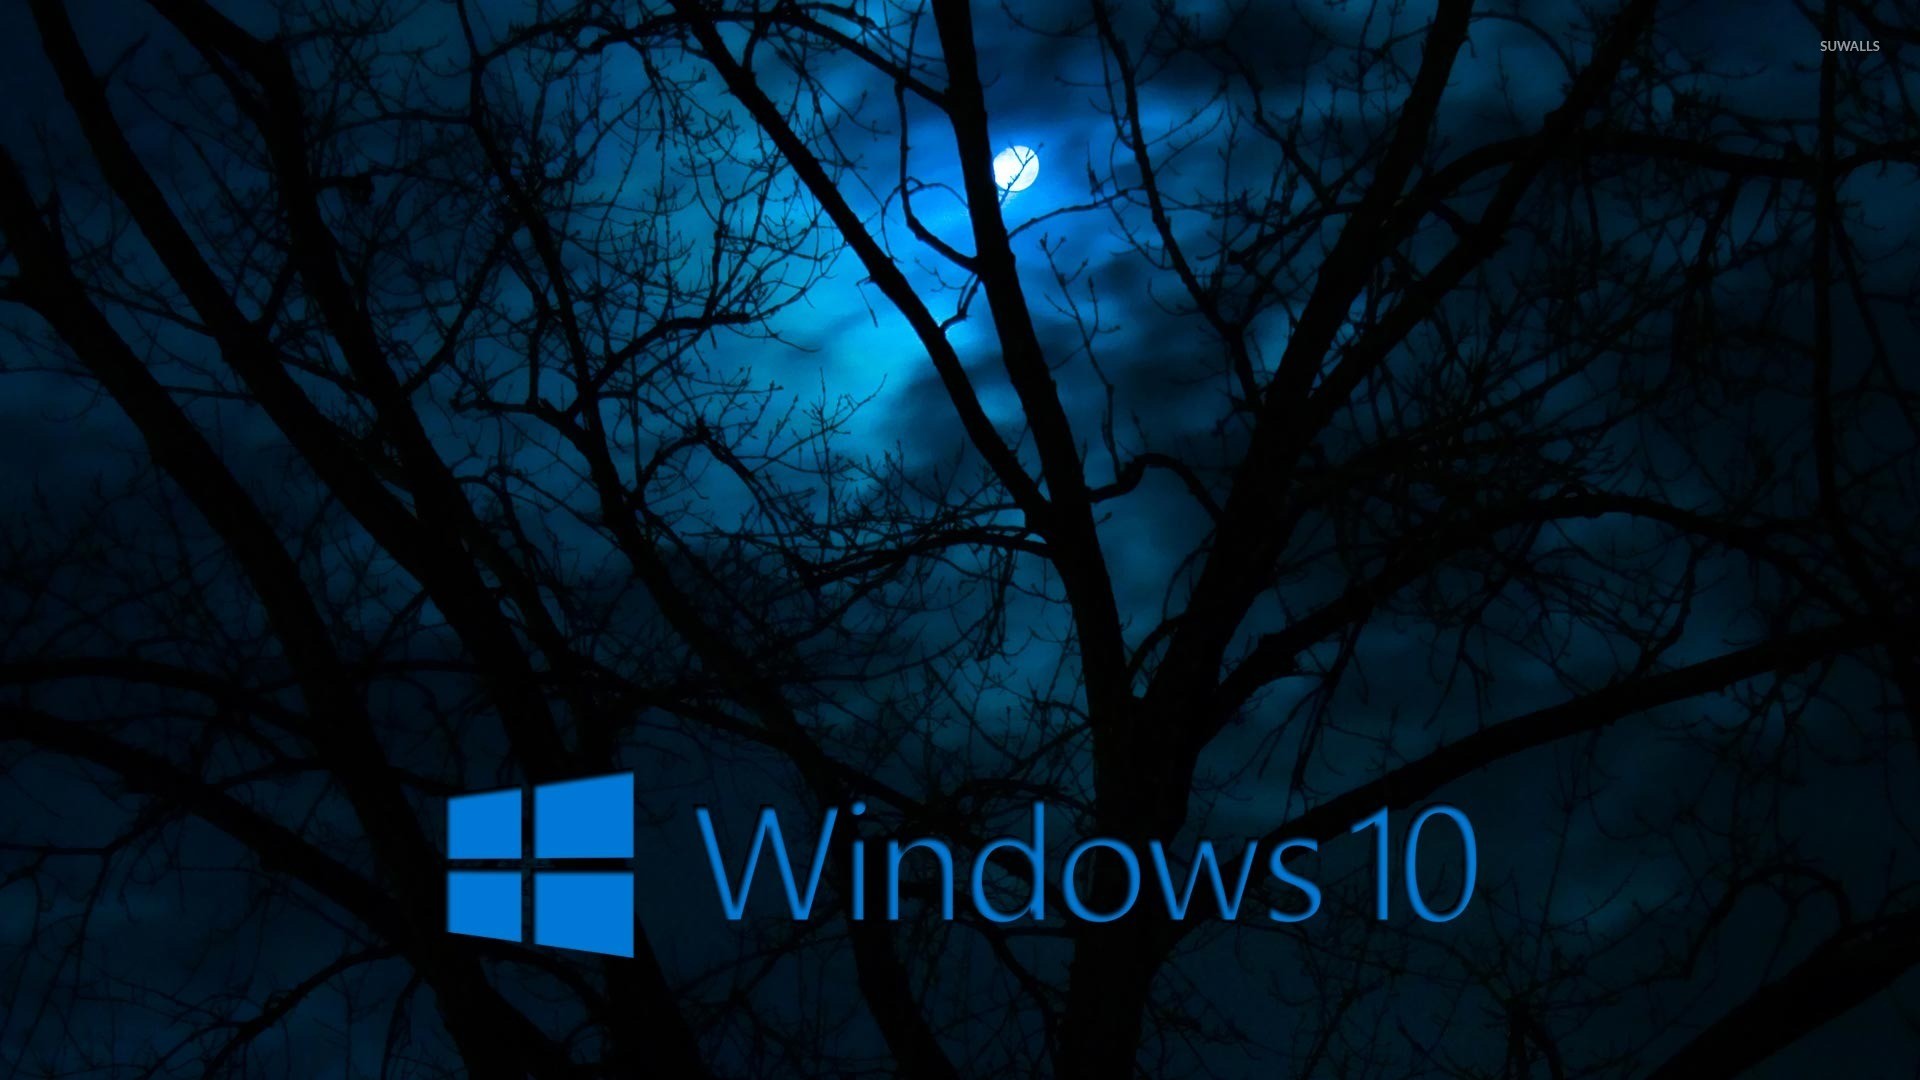 1920x1080 Windows 10 in the cloudy night [2] wallpaper  jpg